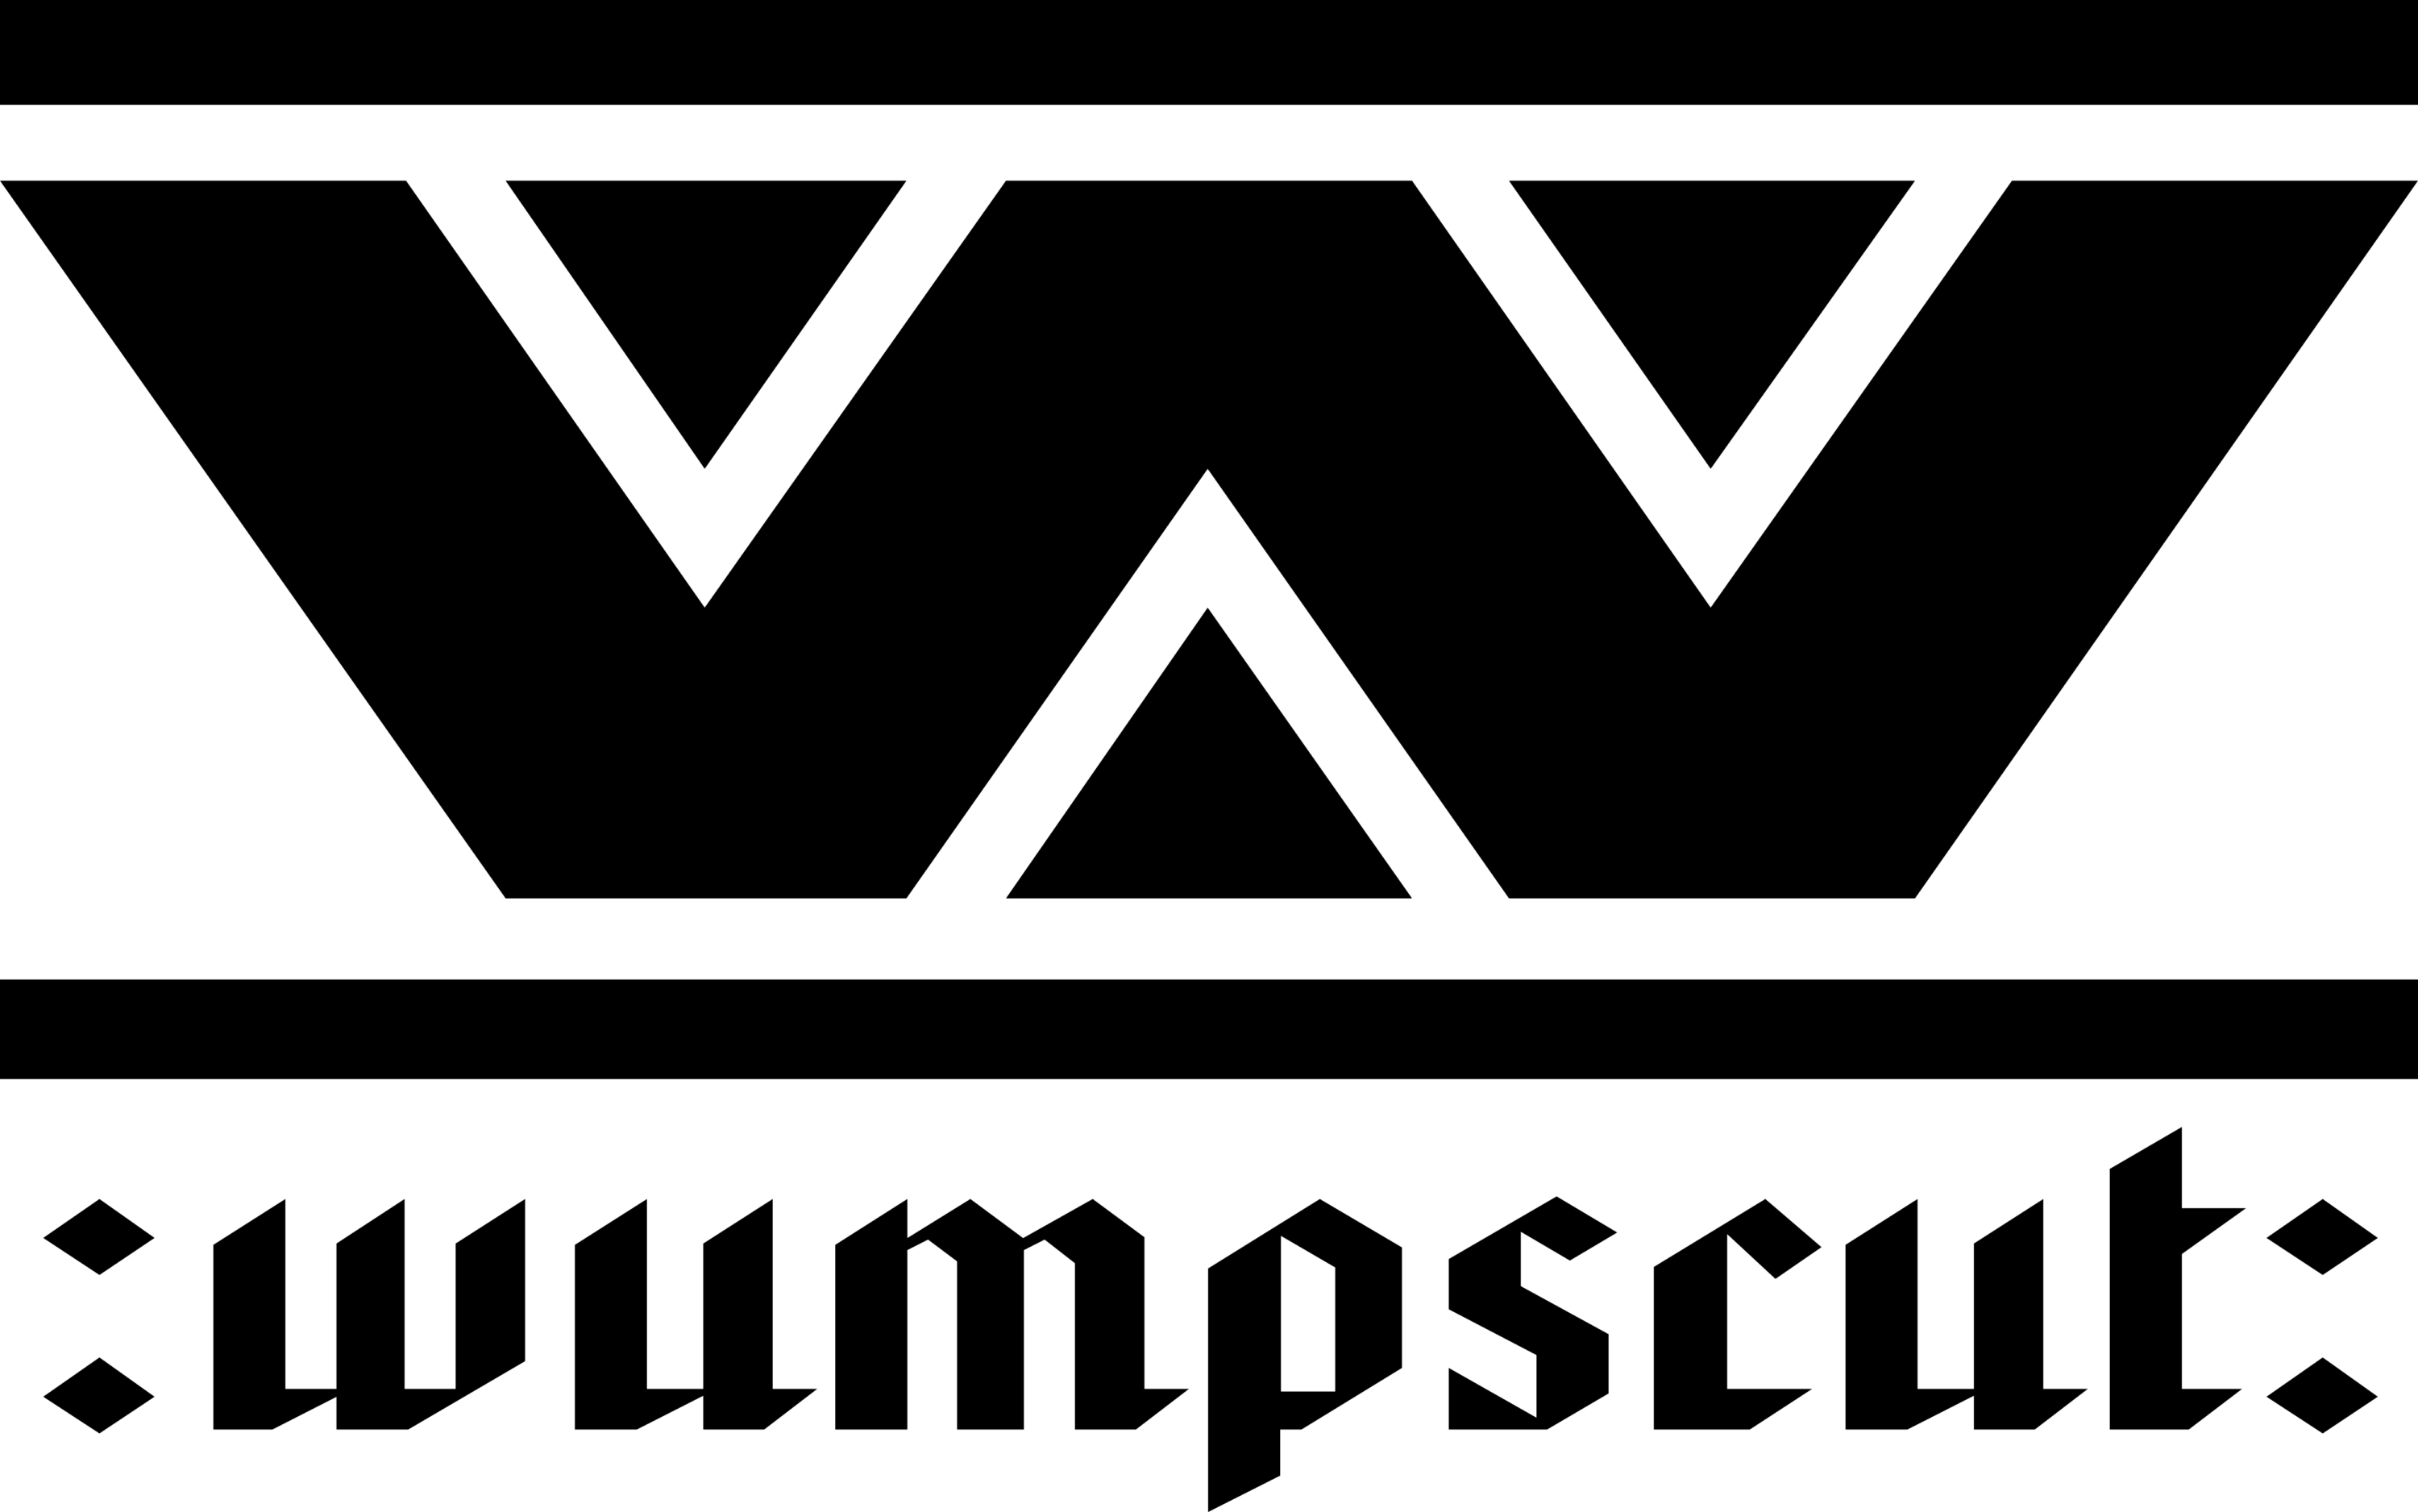 Wumpscut Logo